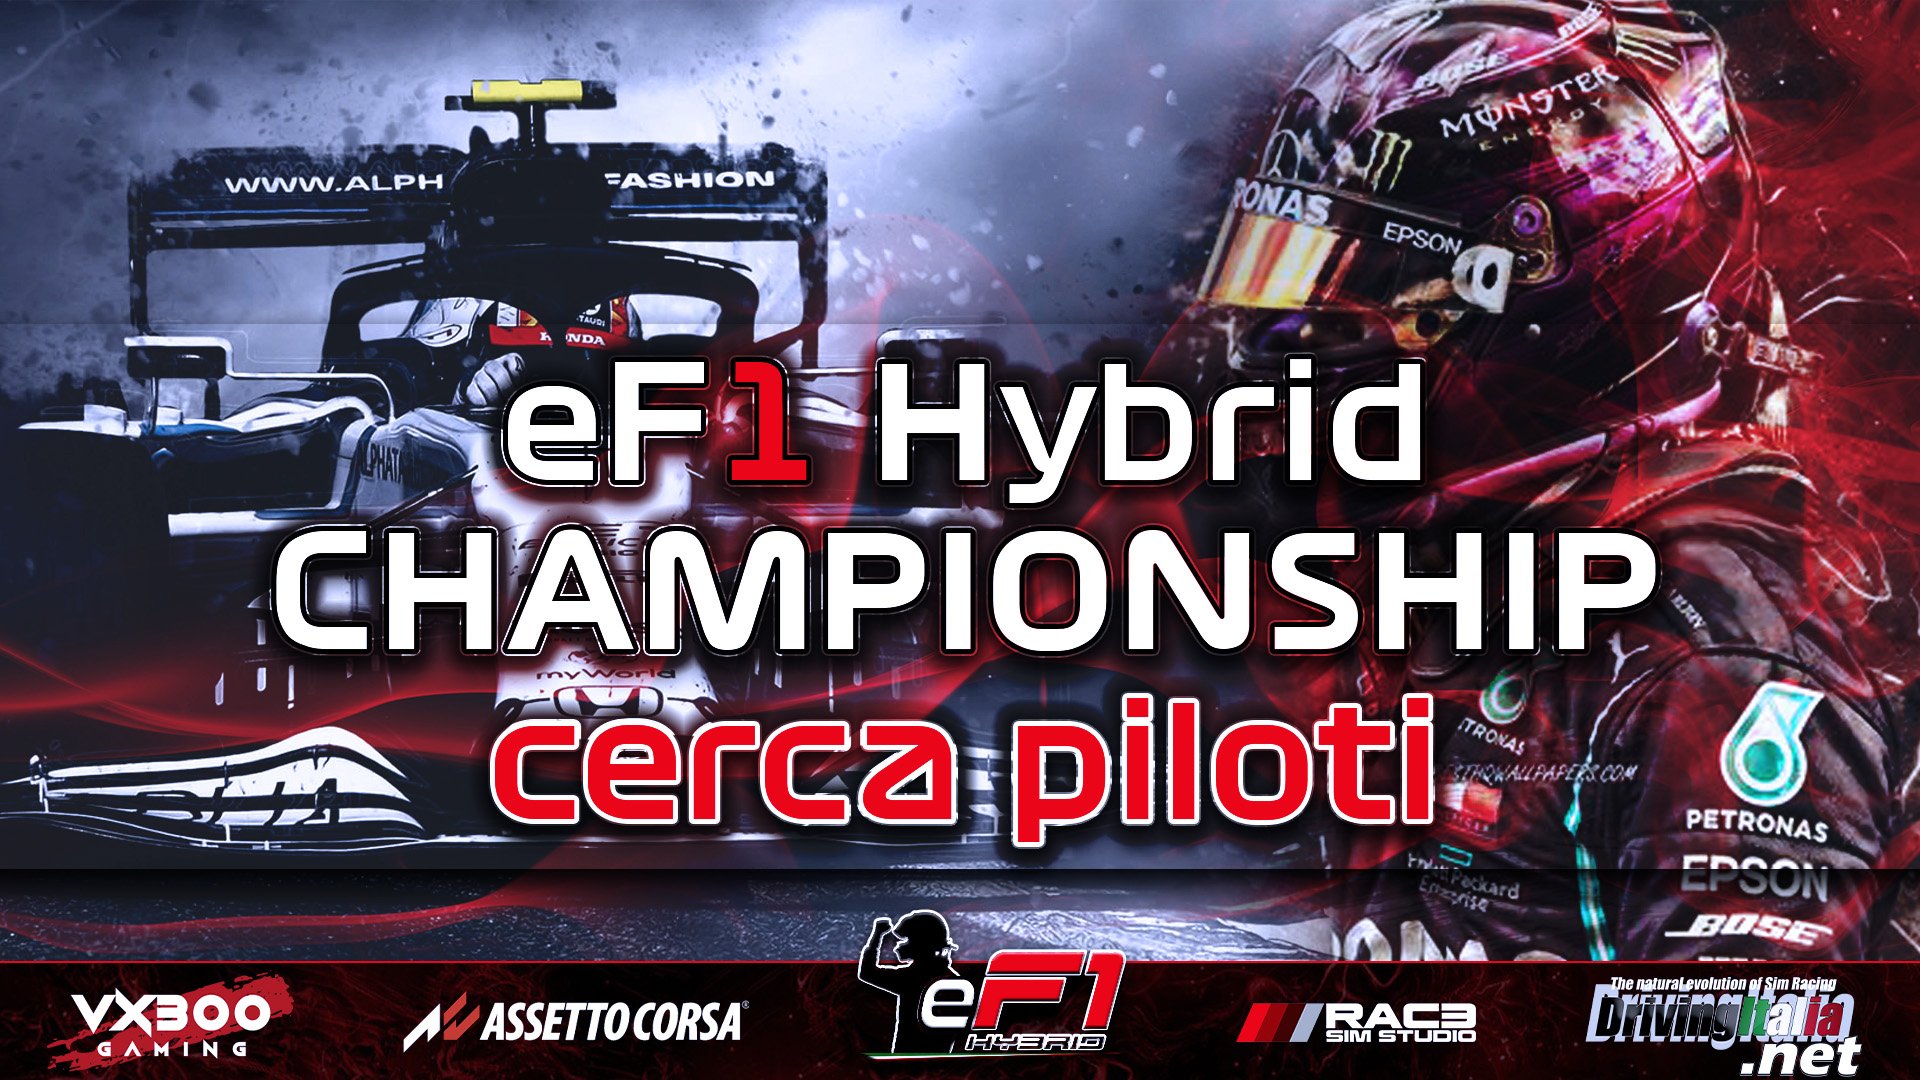 Assetto Corsa eF1 Hybrid Championship